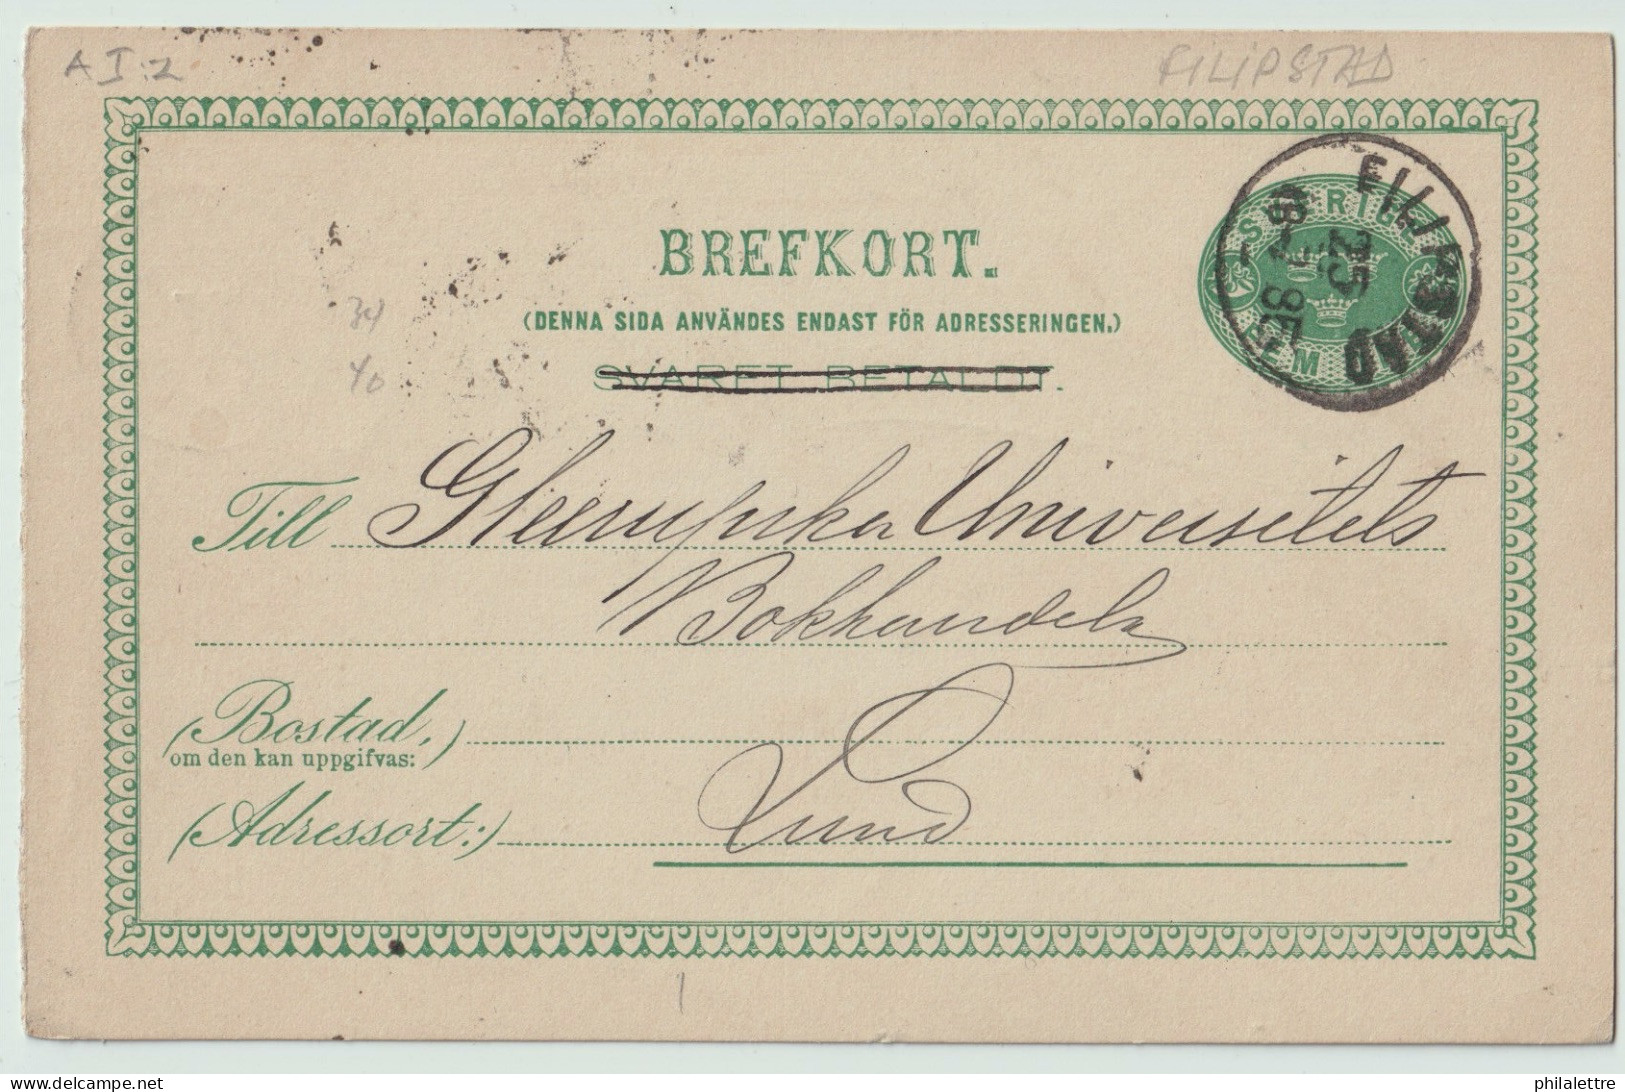 SUÈDE / SWEDEN - 1885 - "FILIPSTAD" CDS On 5ö Postal Card Mi.P9F Addressed To Lund - Storia Postale